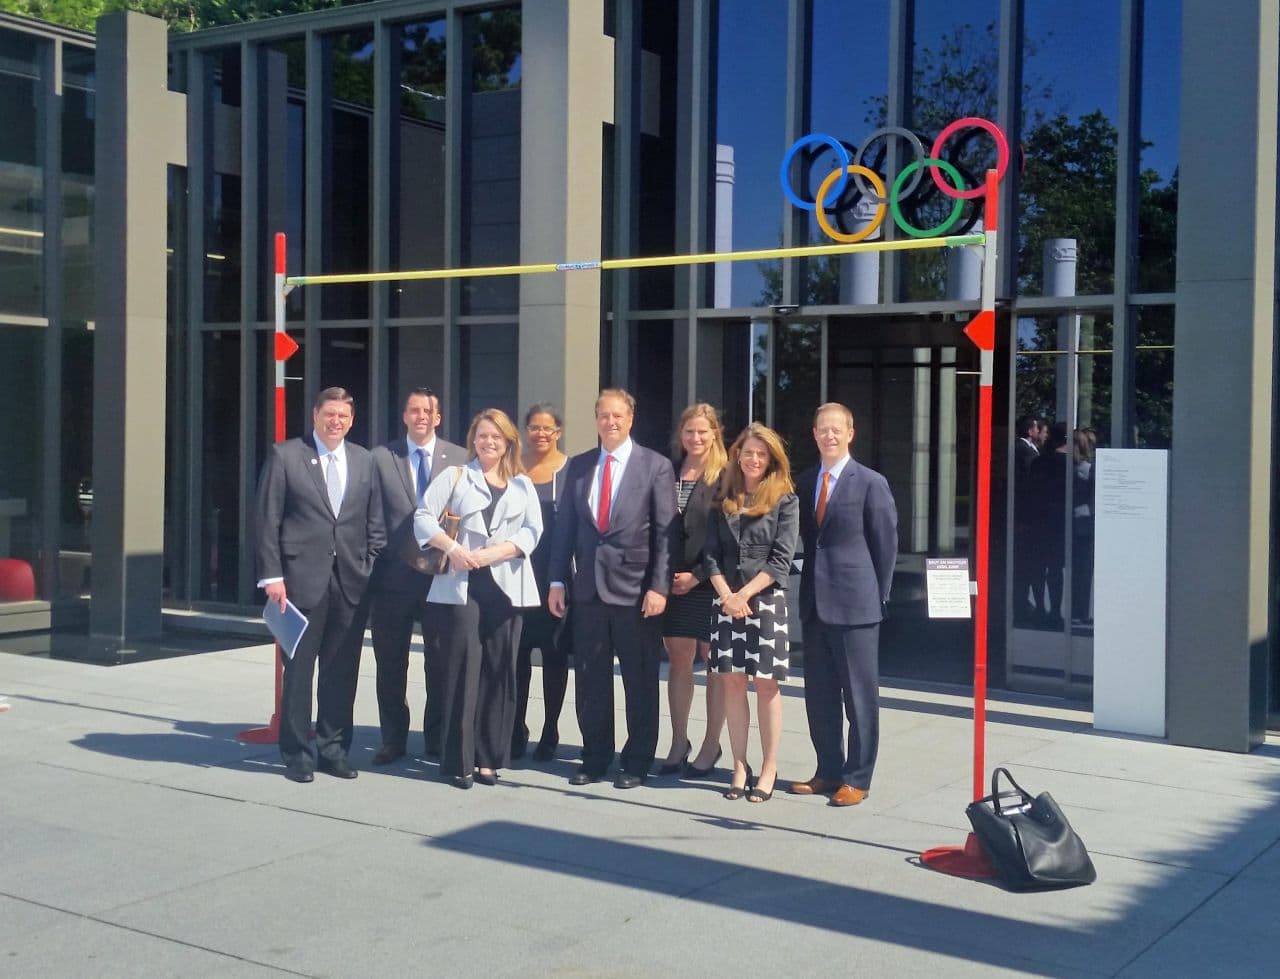 Boston 2024 Encouraged By Meetings With IOC In Switzerland WBUR News